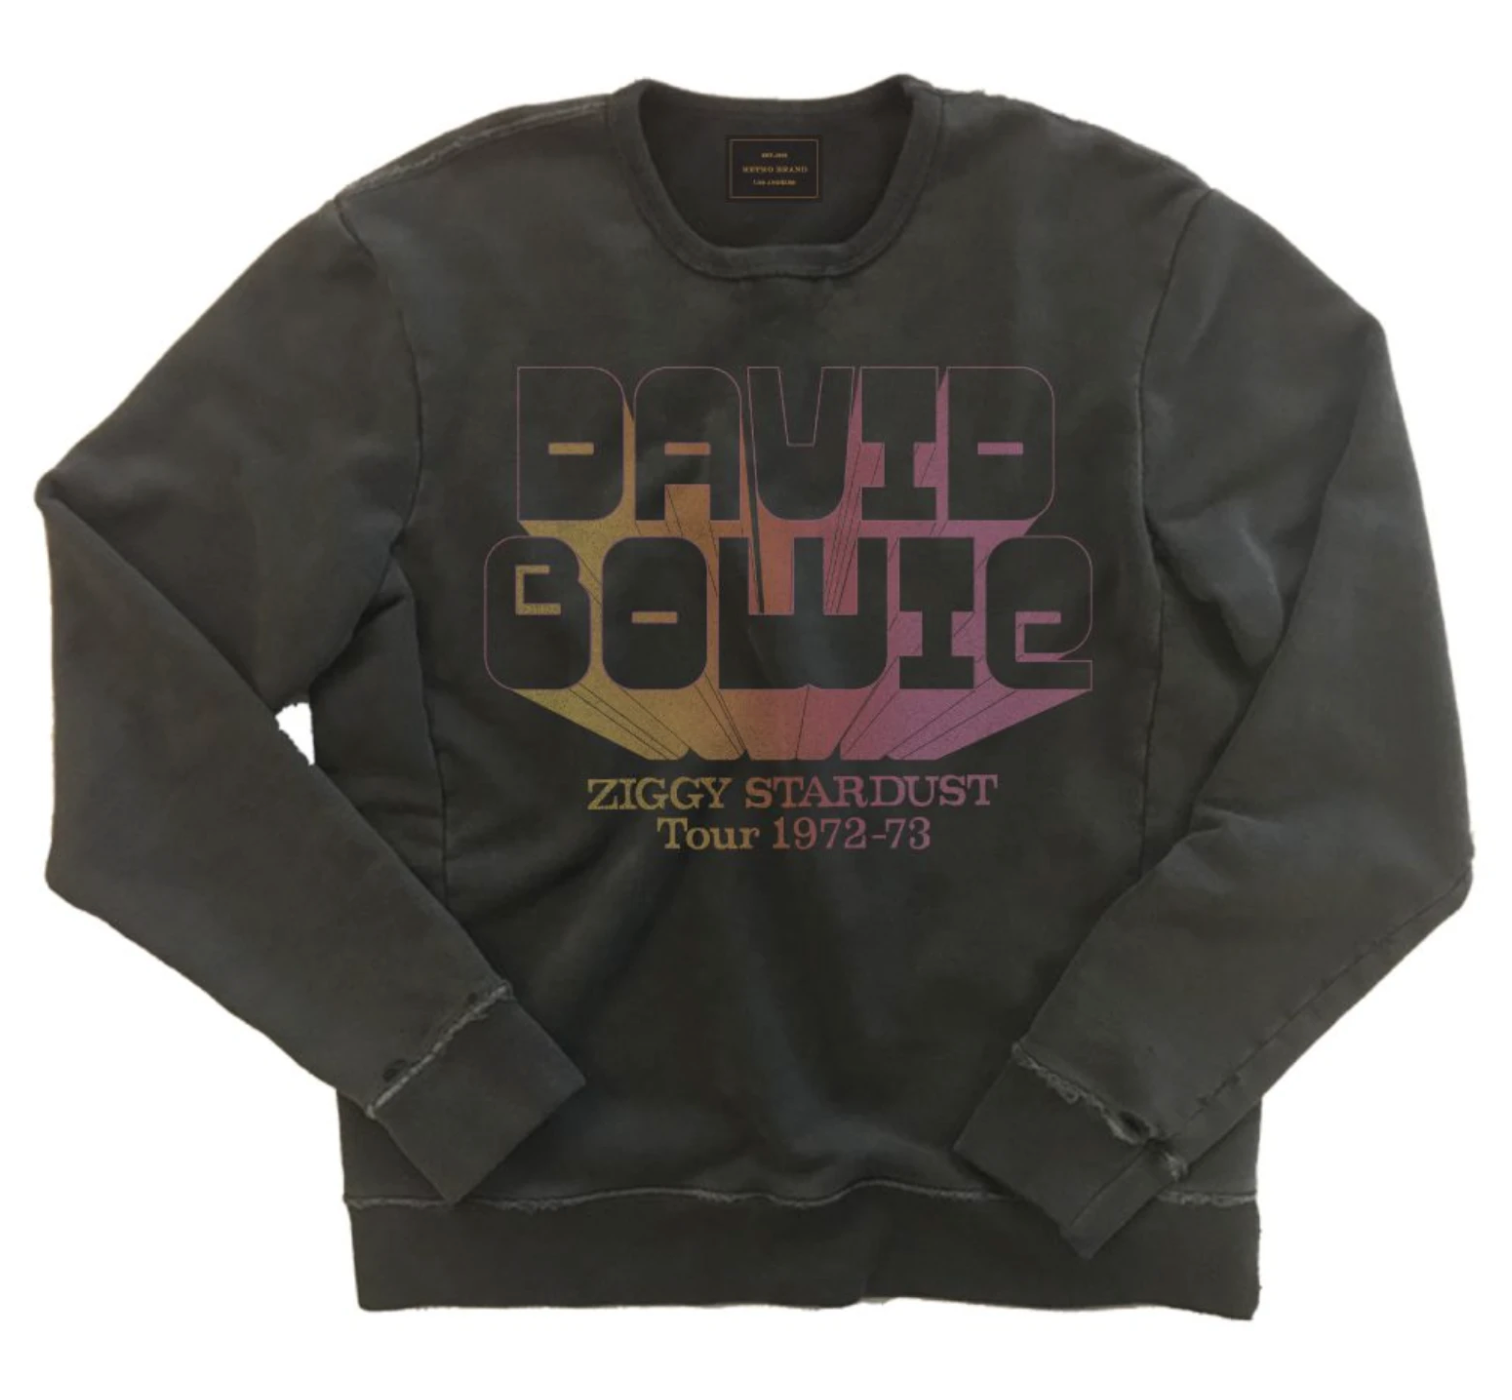 David Bowie Ziggy Stardust Tour 1972-73 in orange/purple burst font on our black 100% French Terry Black Label Sweatshirt